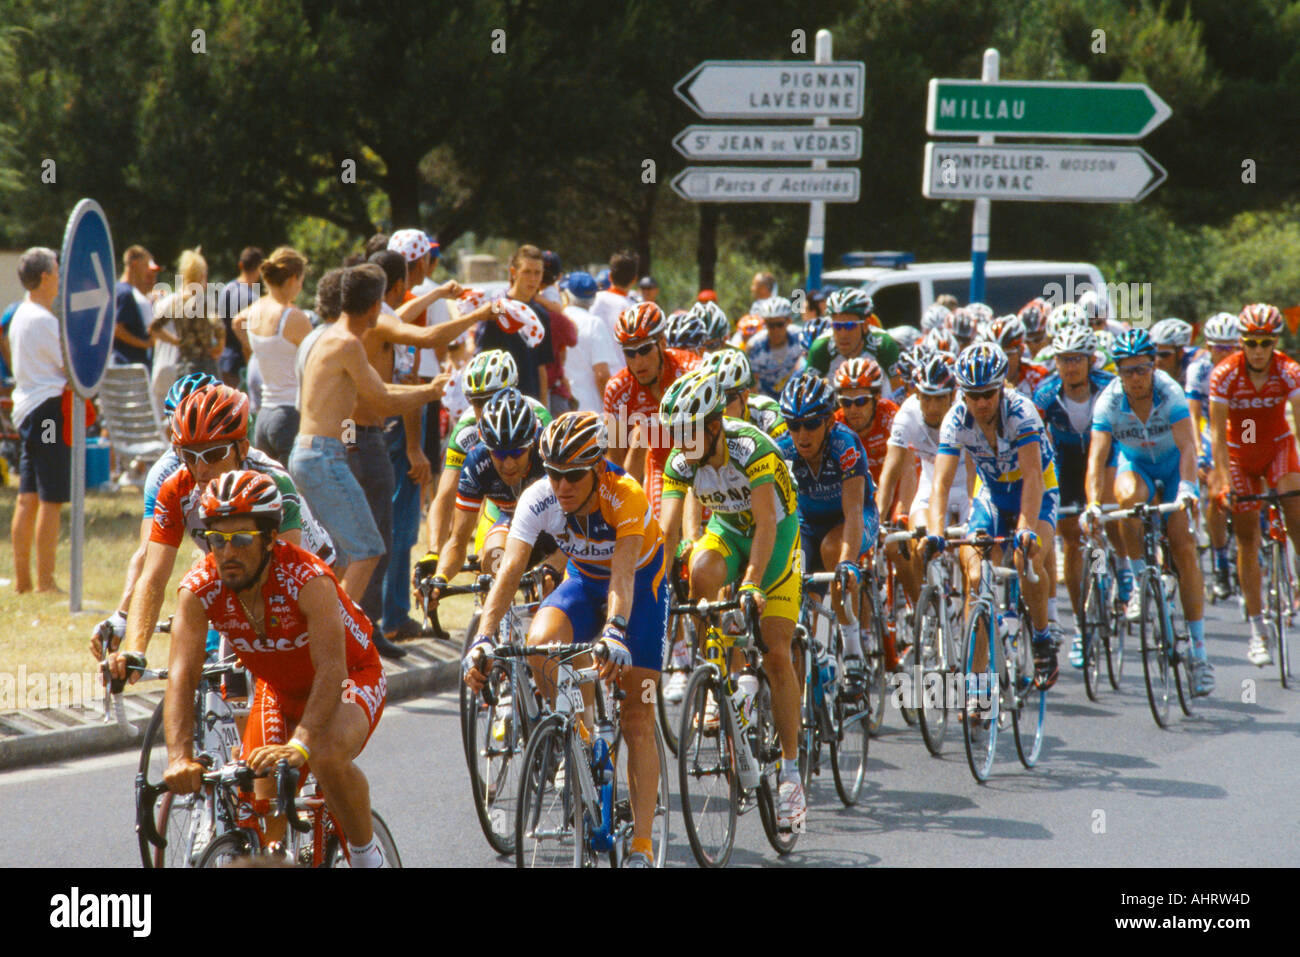 Montpellier Frankreich Tour de France Radfahrer Stockfoto